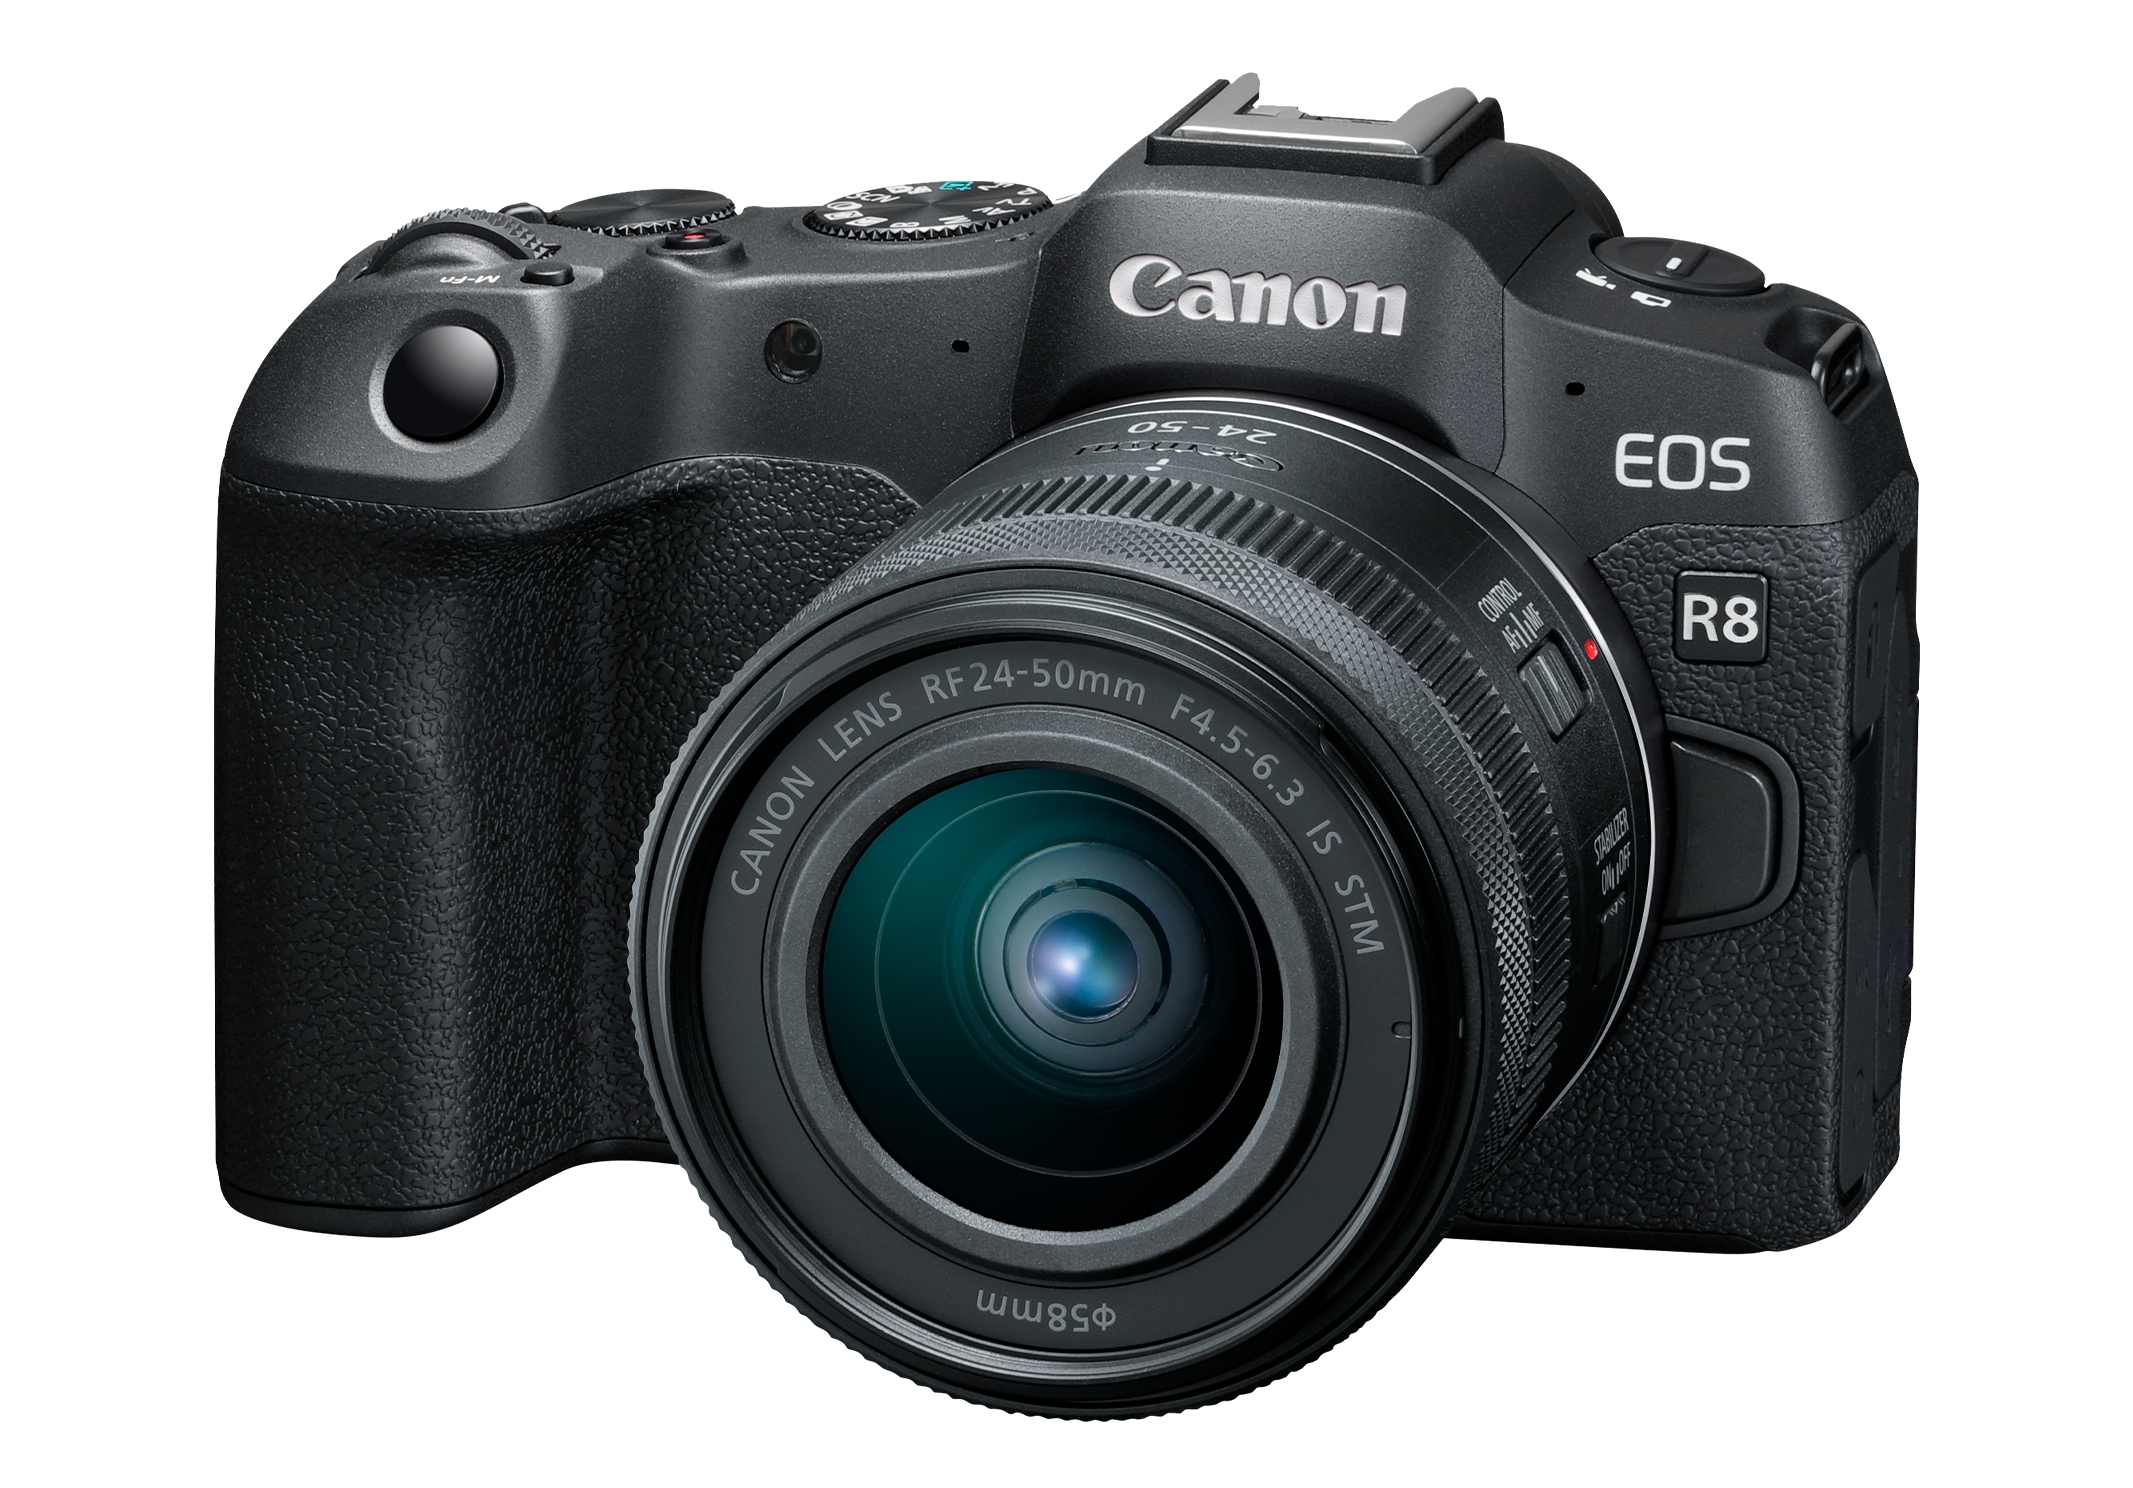 Canon EOS R8 - Full frame hybrid camera with 10 bit log under 2000 Euro